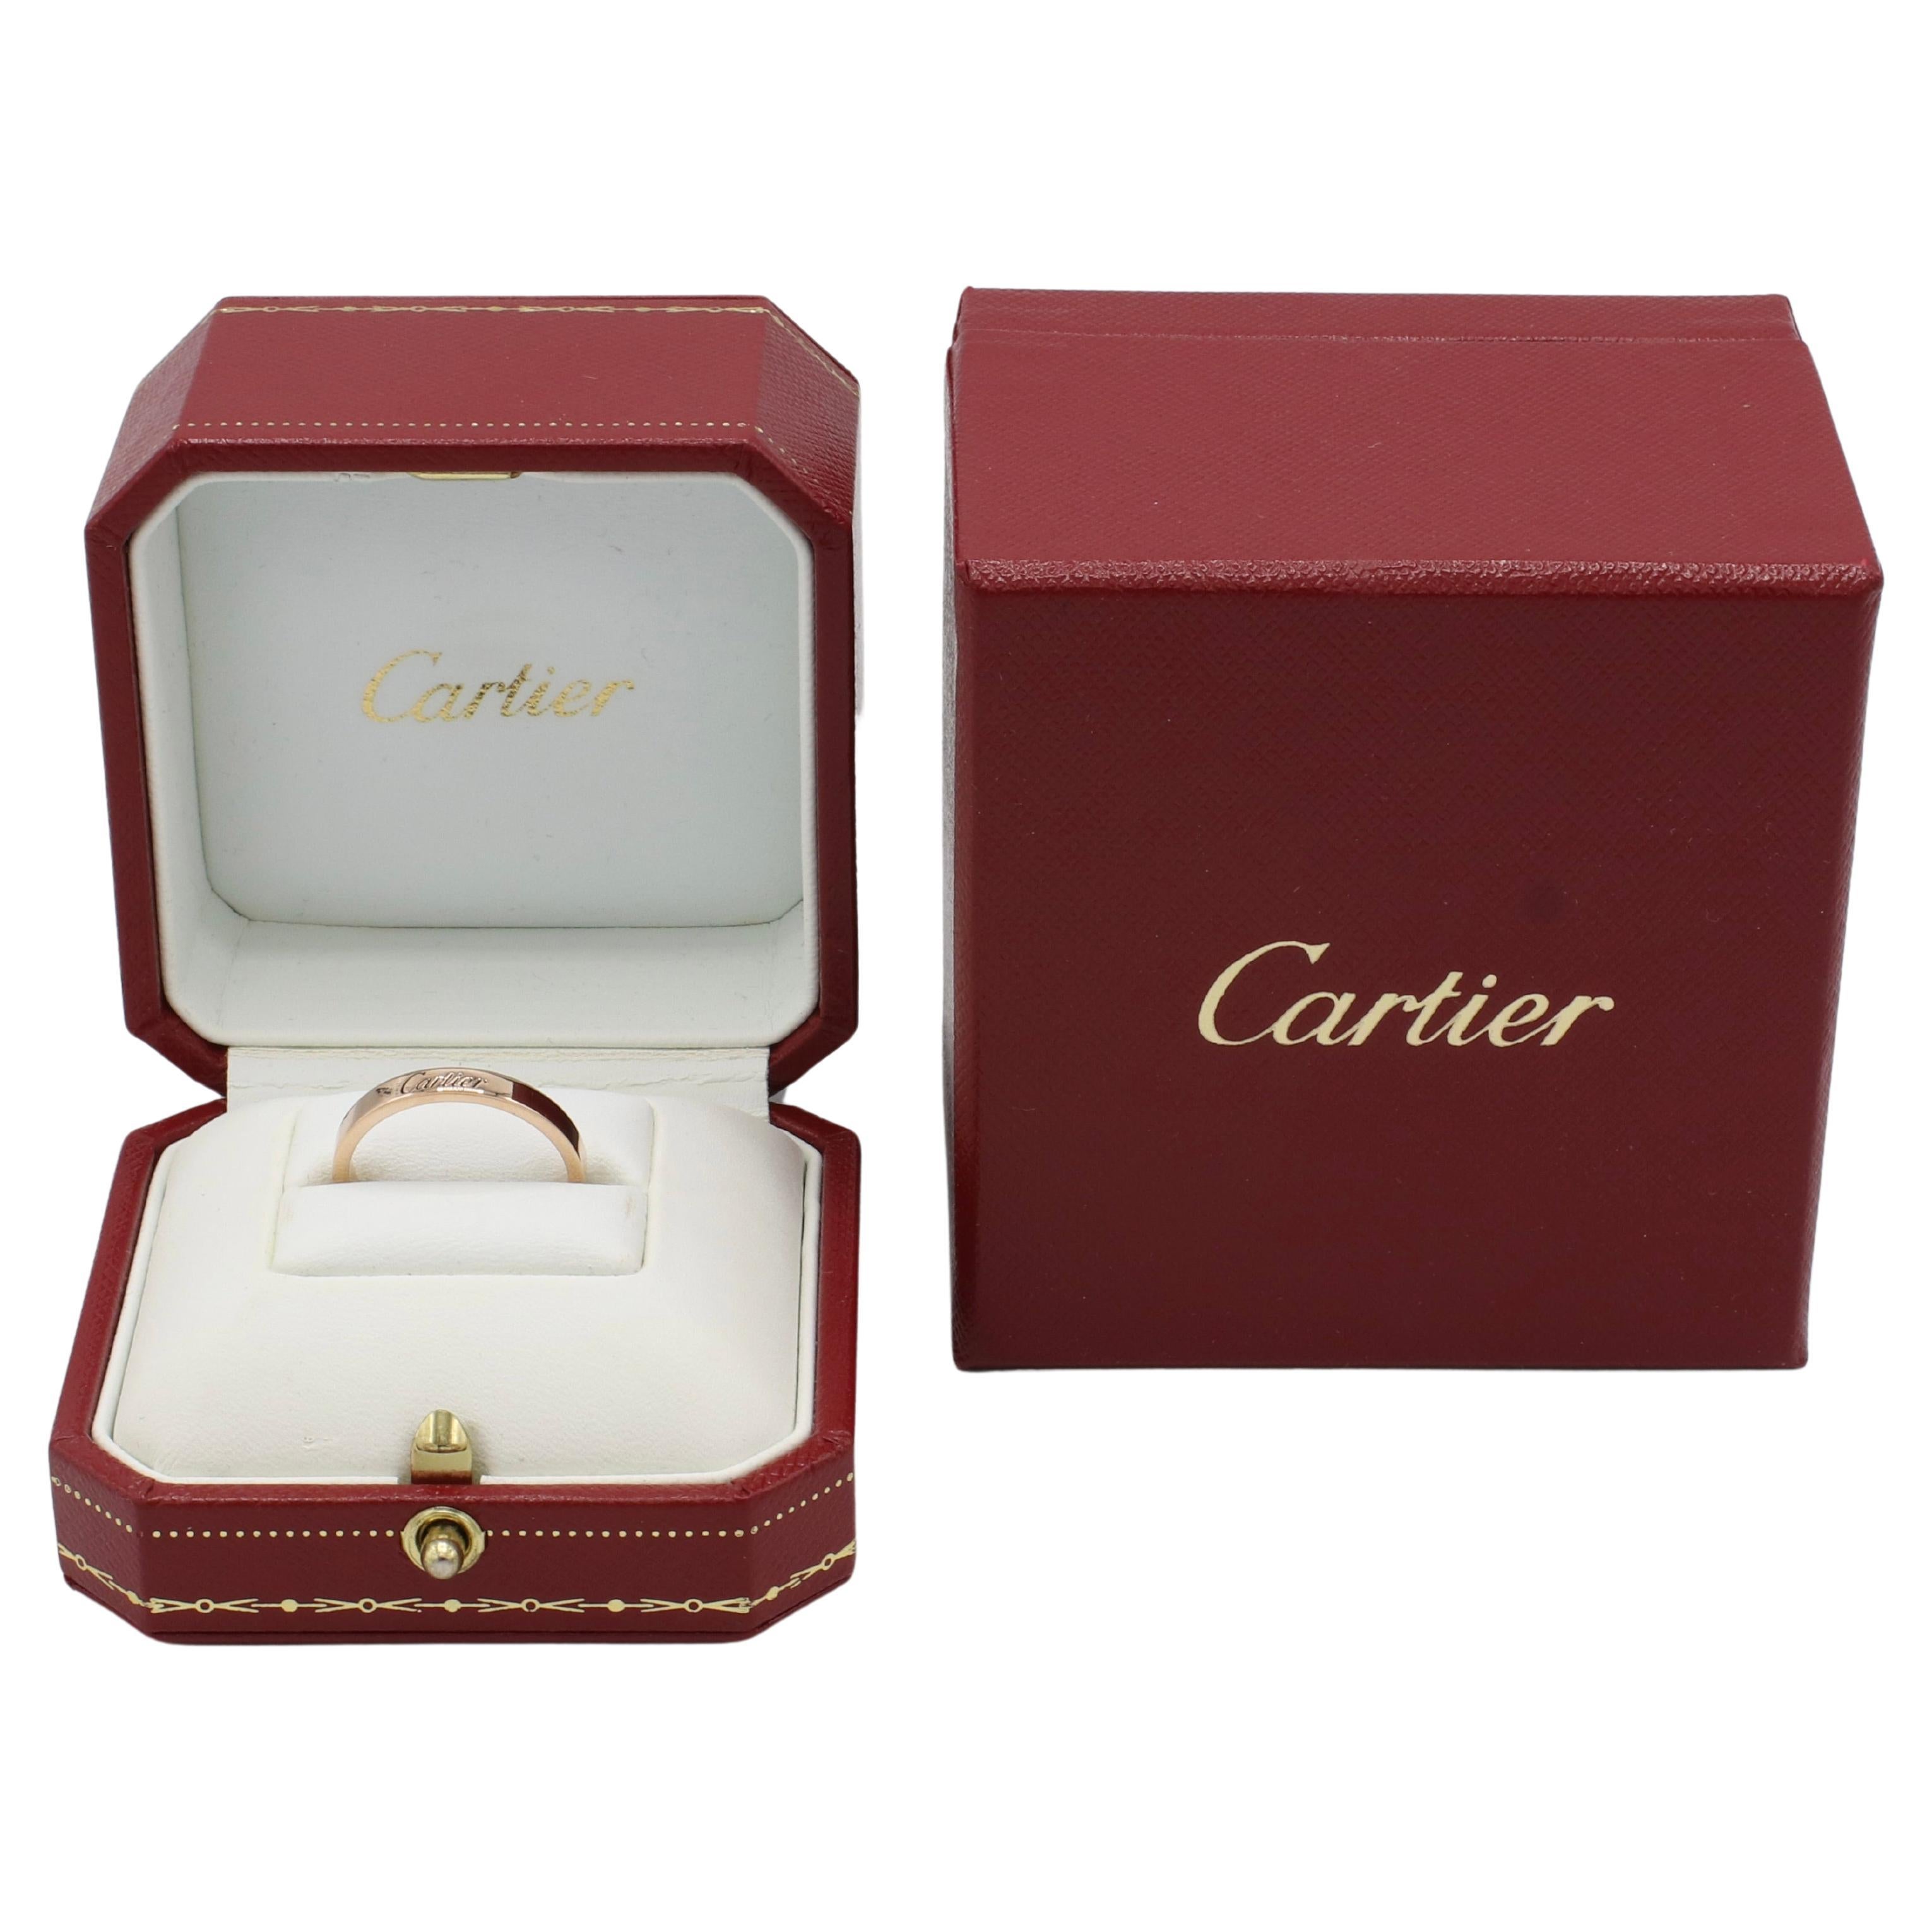 Cartier C De Cartier 18 Karat Rose Gold Wedding Band Ring 
Metal: 18k rose gold
Weight: 4.18 grams
Retail: $1,190 USD
Size: 58 ( 8.25 US)
Width: 3mm
